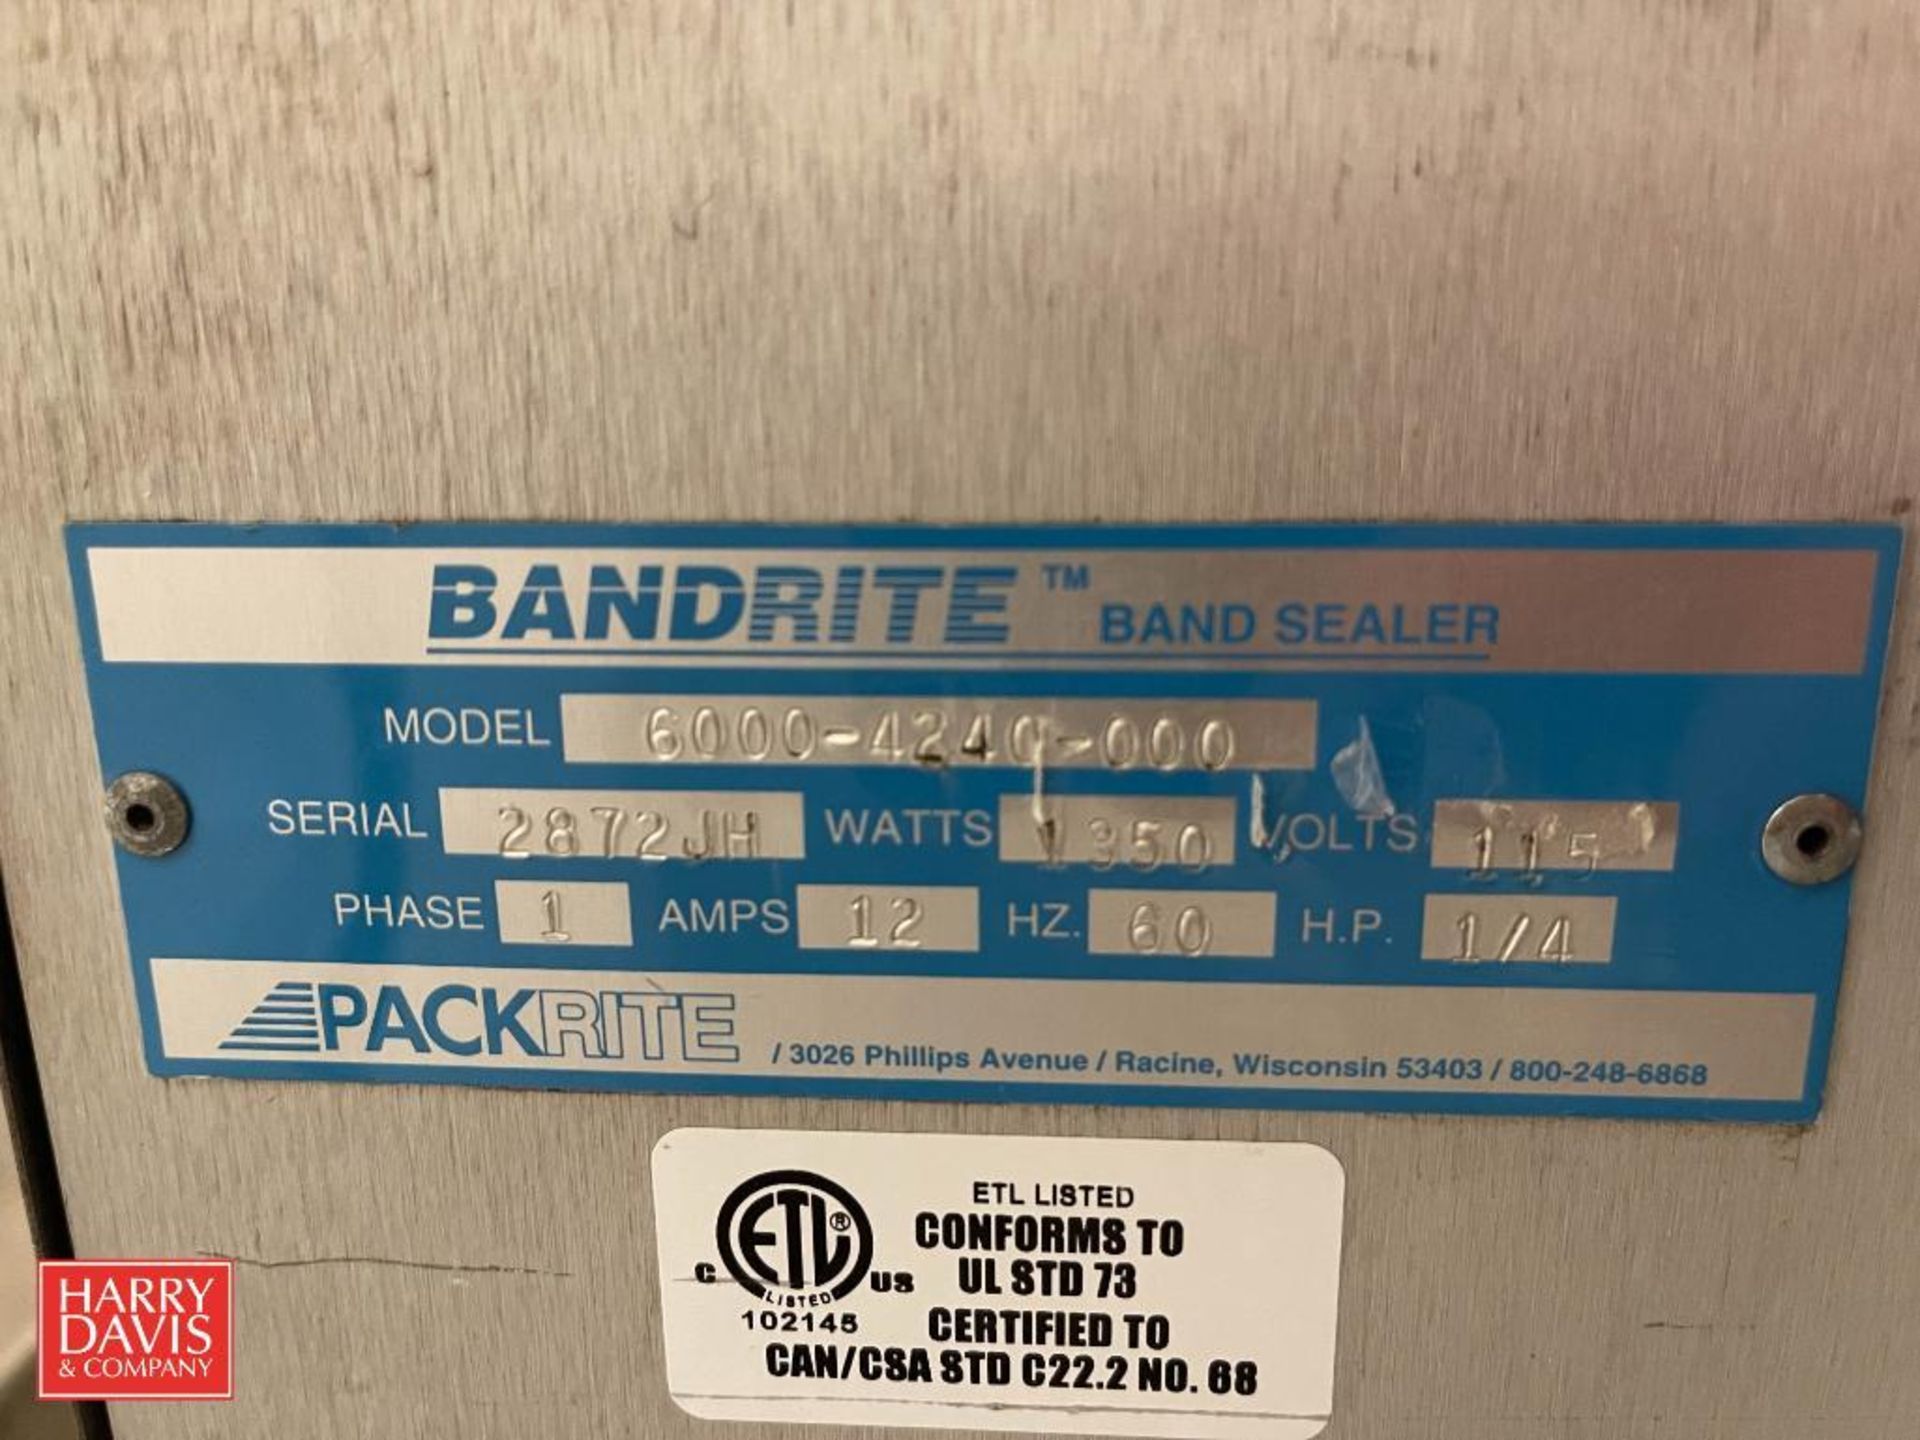 Bandrite Band Sealer, Model: 6000-4240-000, S/N: 2872JH - Rigging Fee: $250 - Image 2 of 2